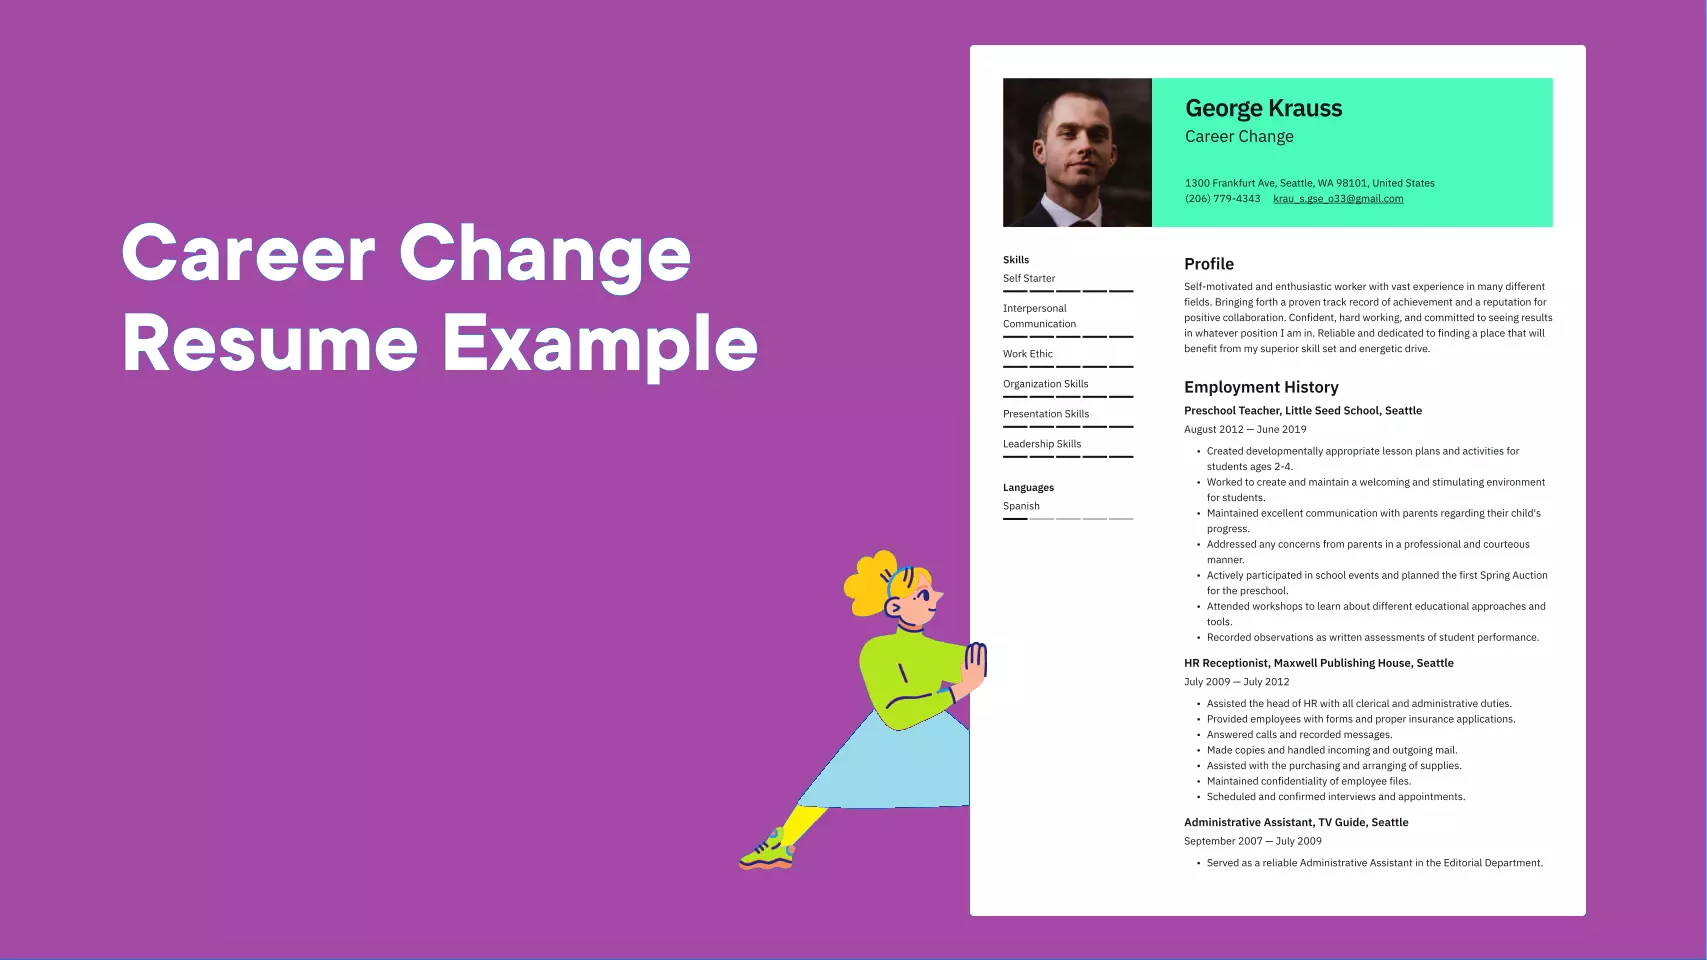 Resume Formatting for Career Changers: Highlighting Transferable Skills